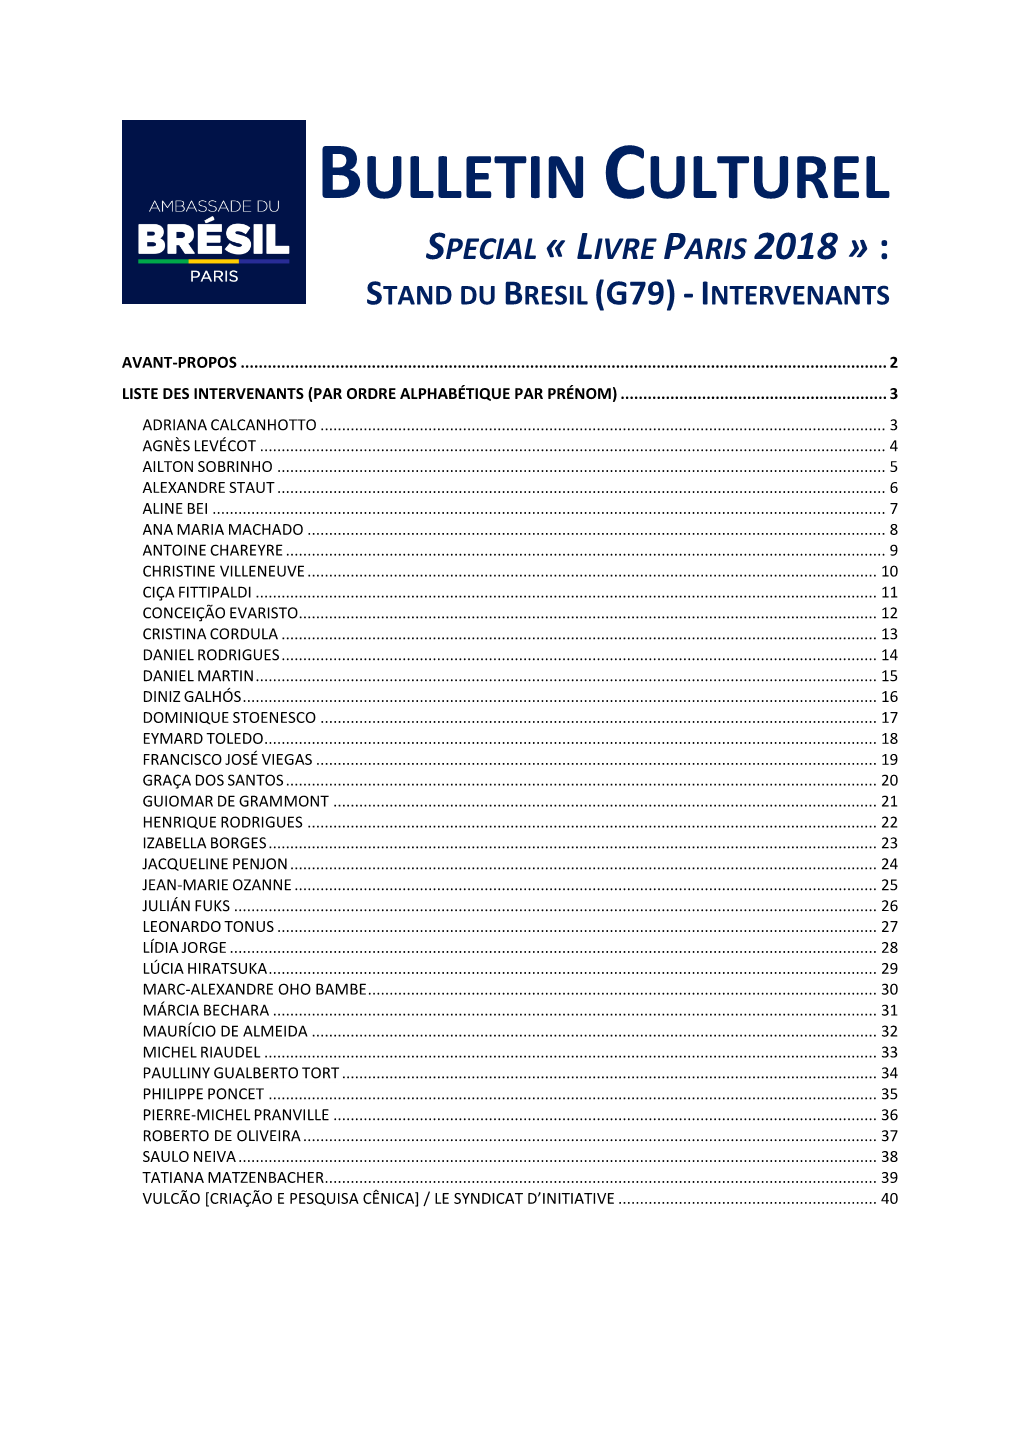 Bulletin Culturel Special « Livre Paris 2018 » : Stand Du Bresil (G79) - Intervenants